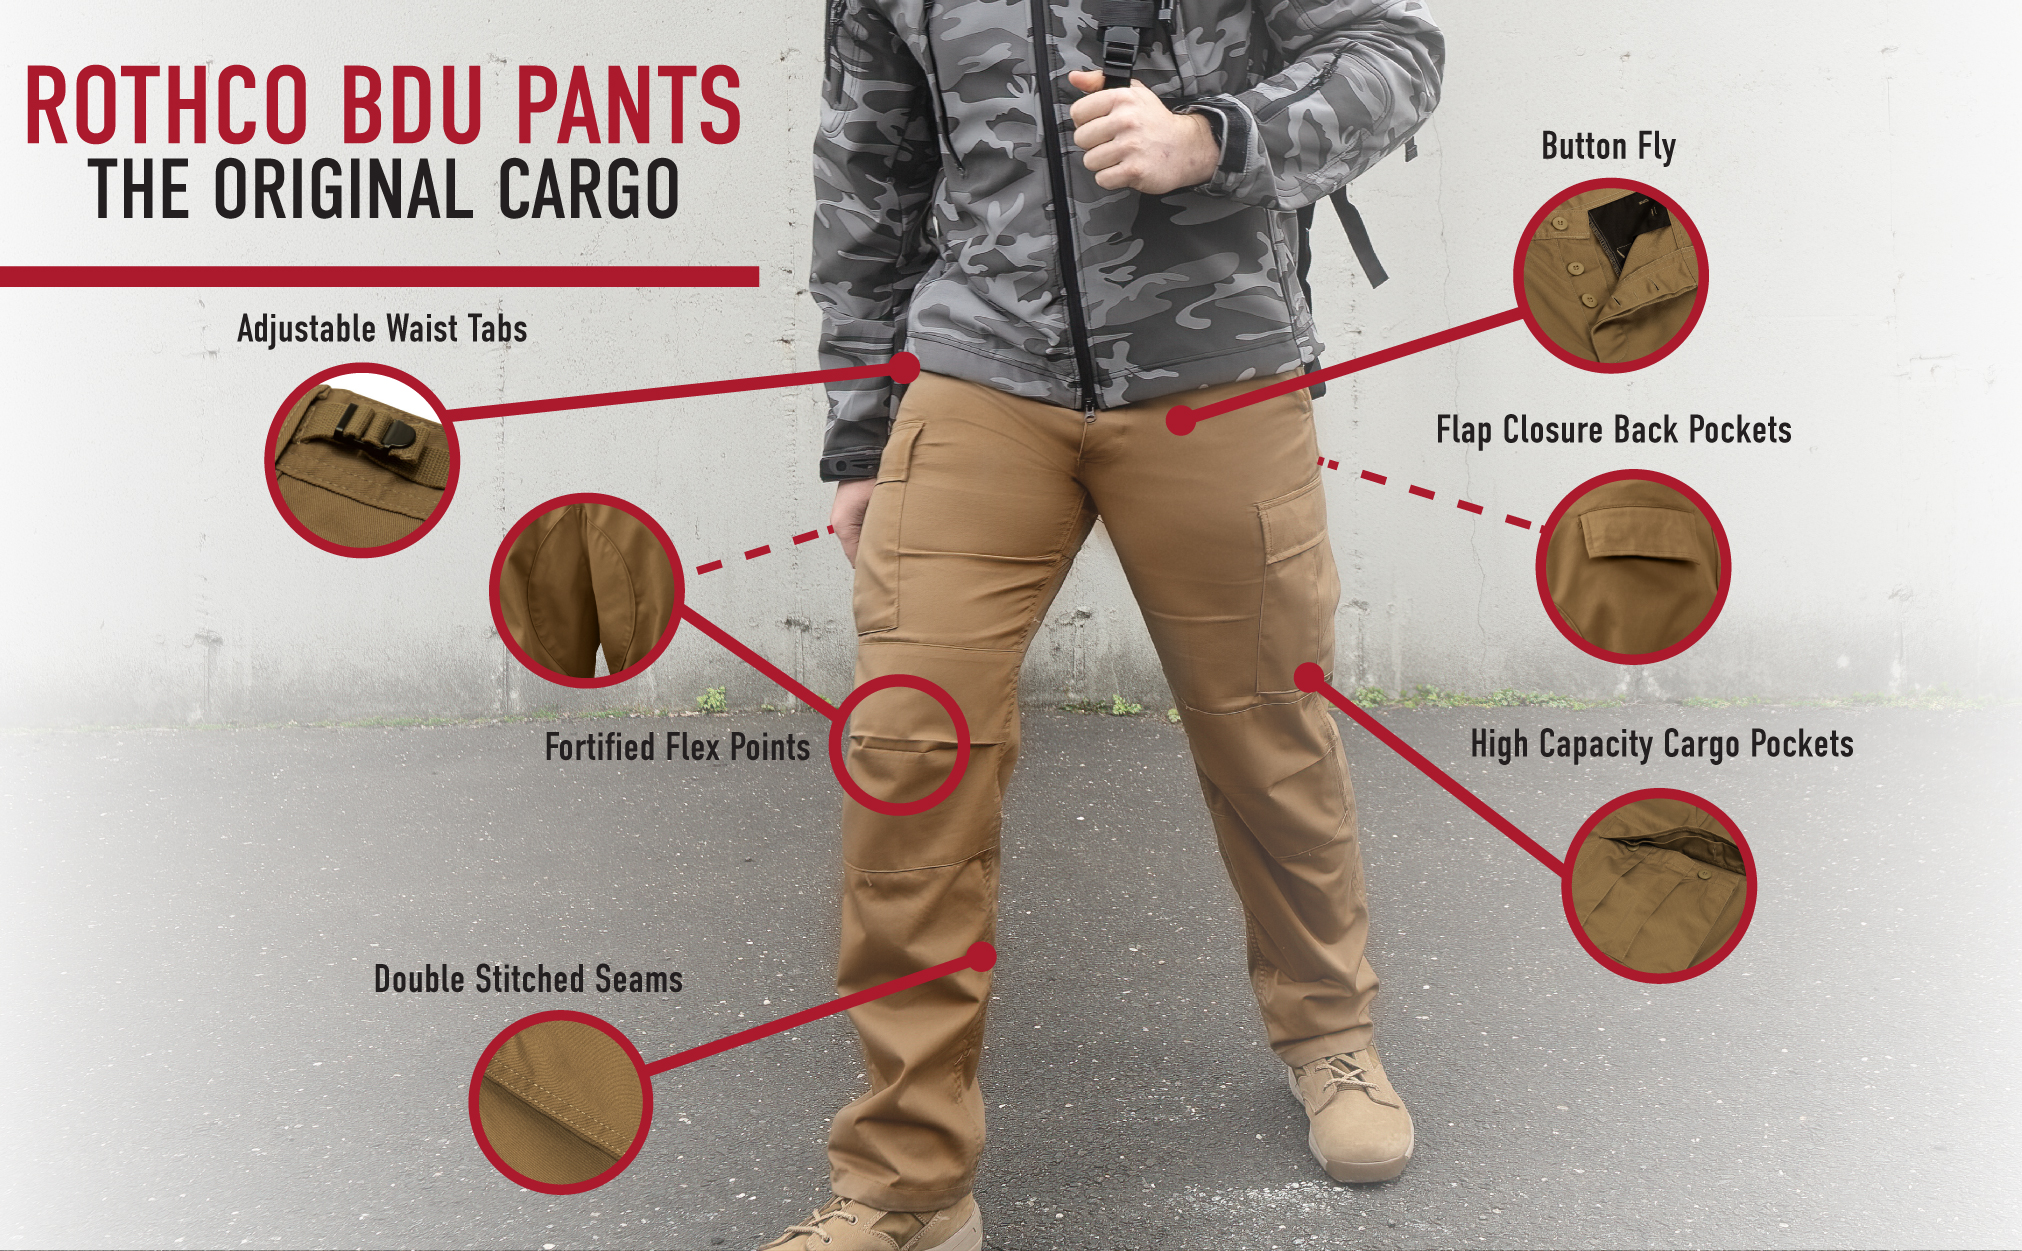 Rothco BDU Cargo Pants,Khaki,3XL - image 3 of 6